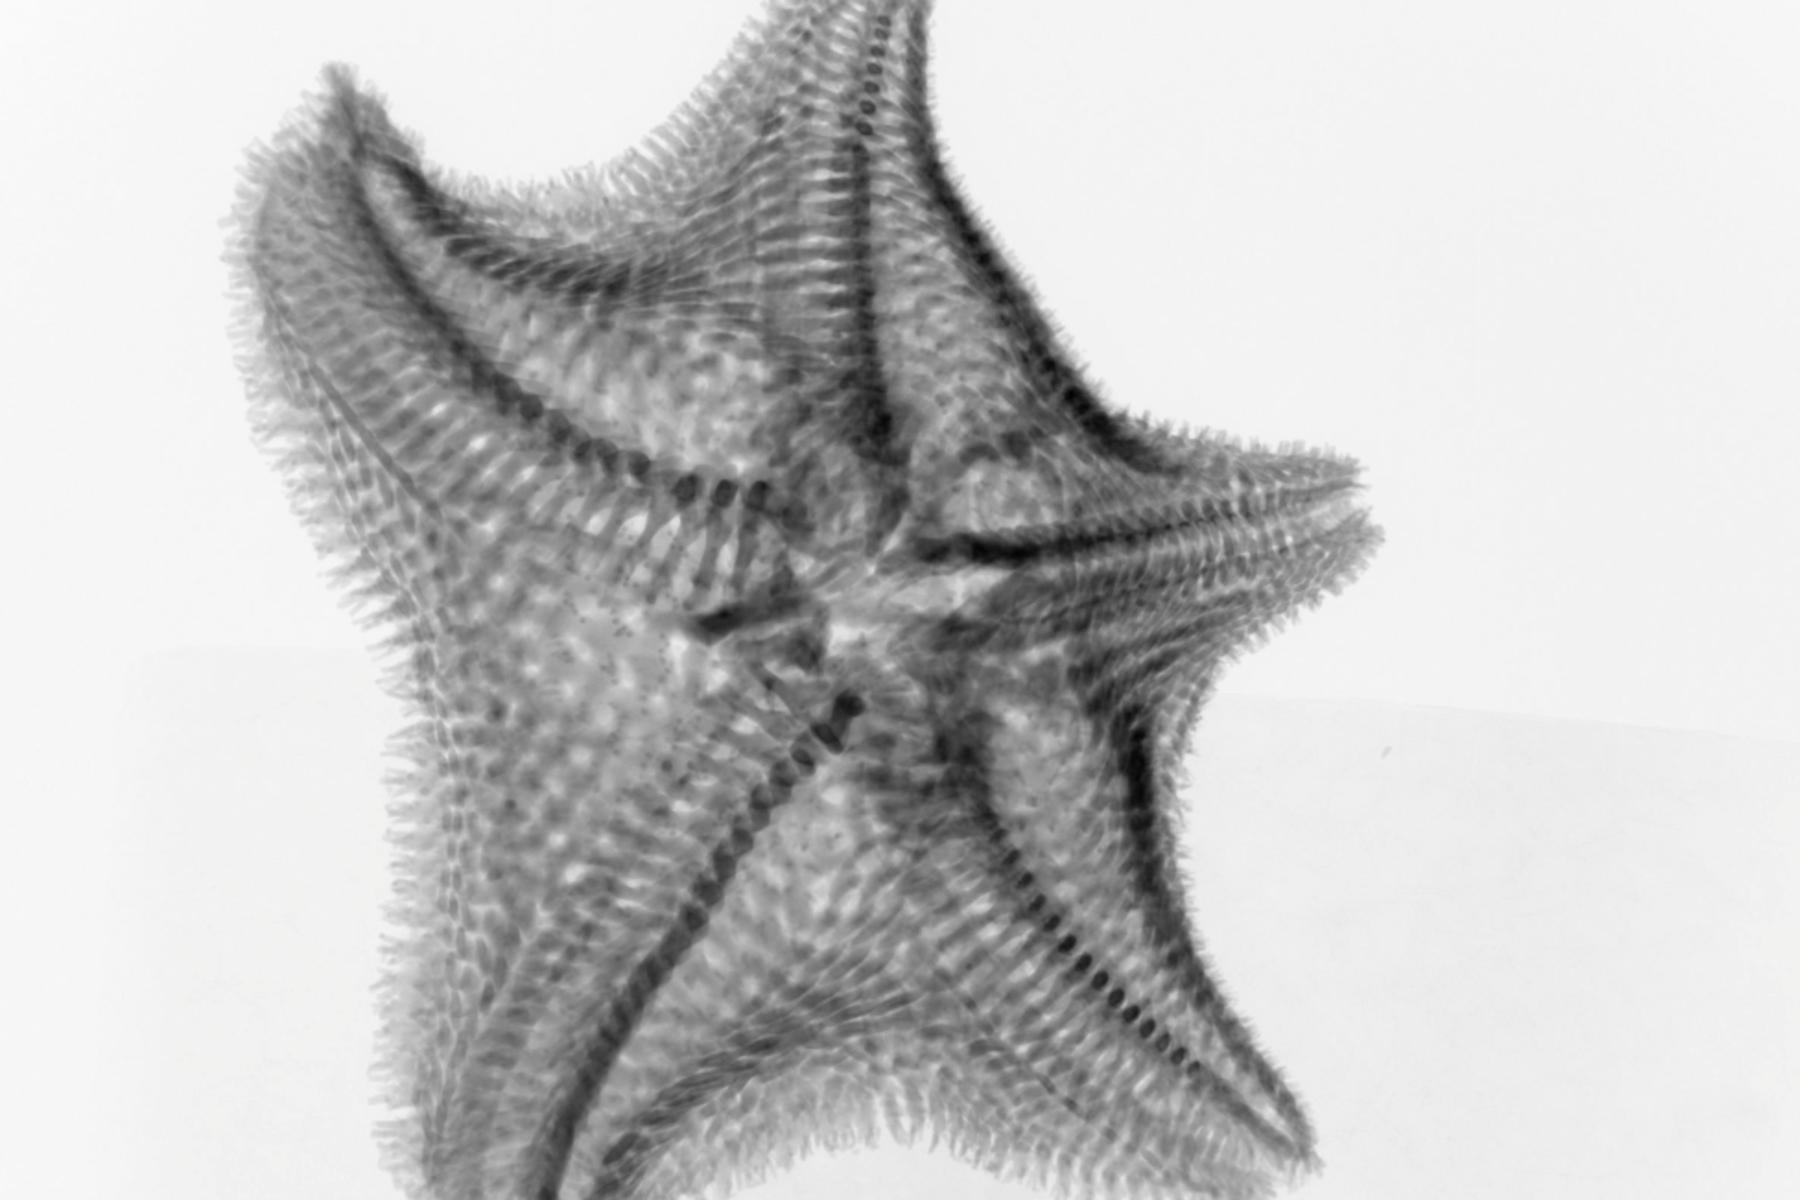 3D scanning reveals new (but extinct) star fish